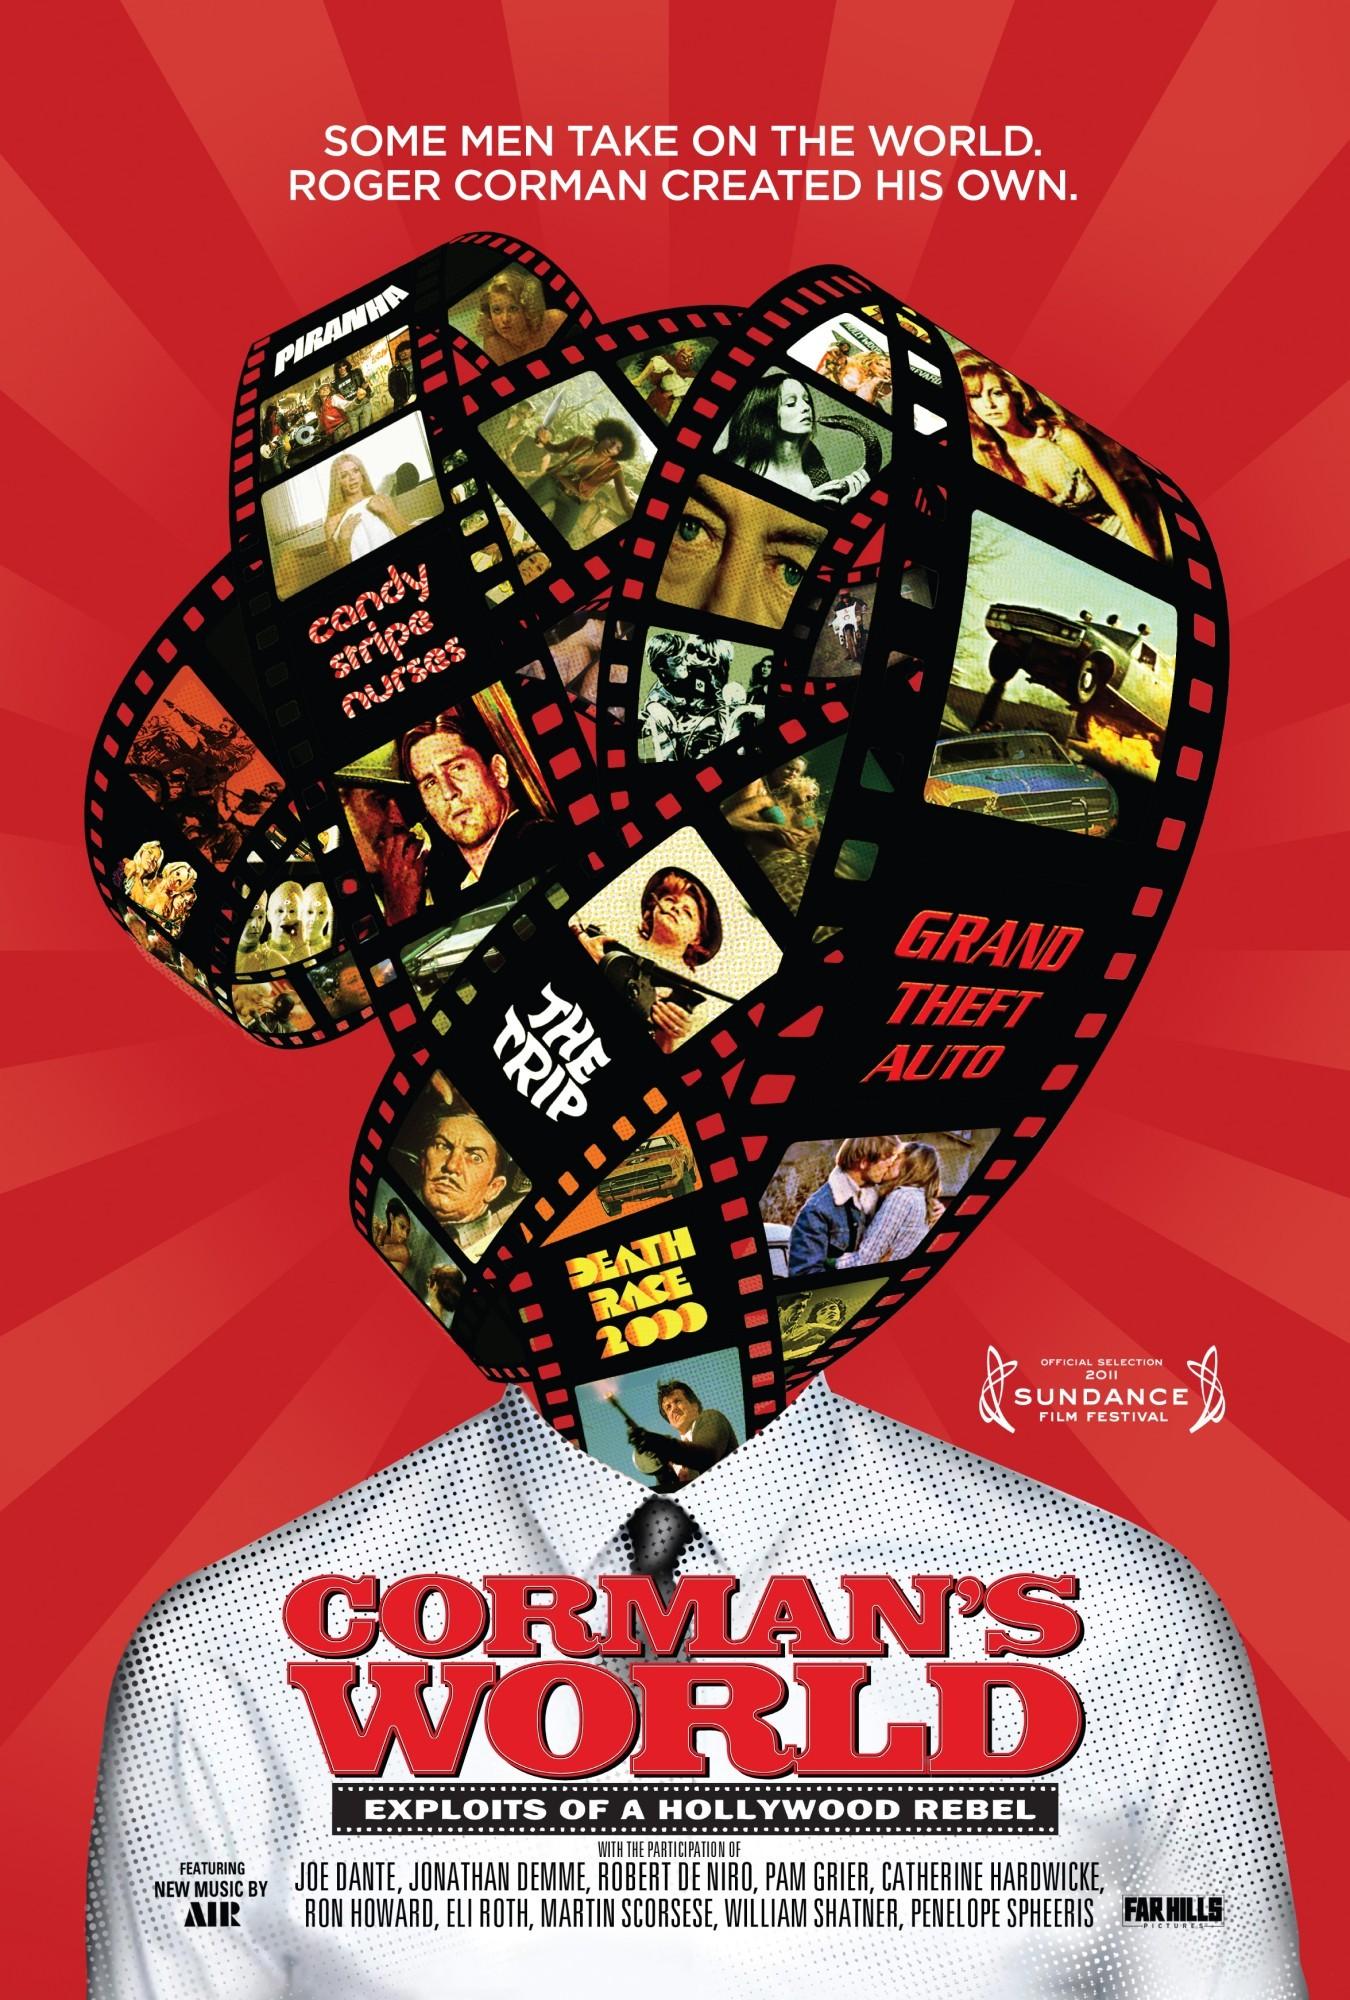 Постер фильма Мир Кормана | Corman's World: Exploits of a Hollywood Rebel